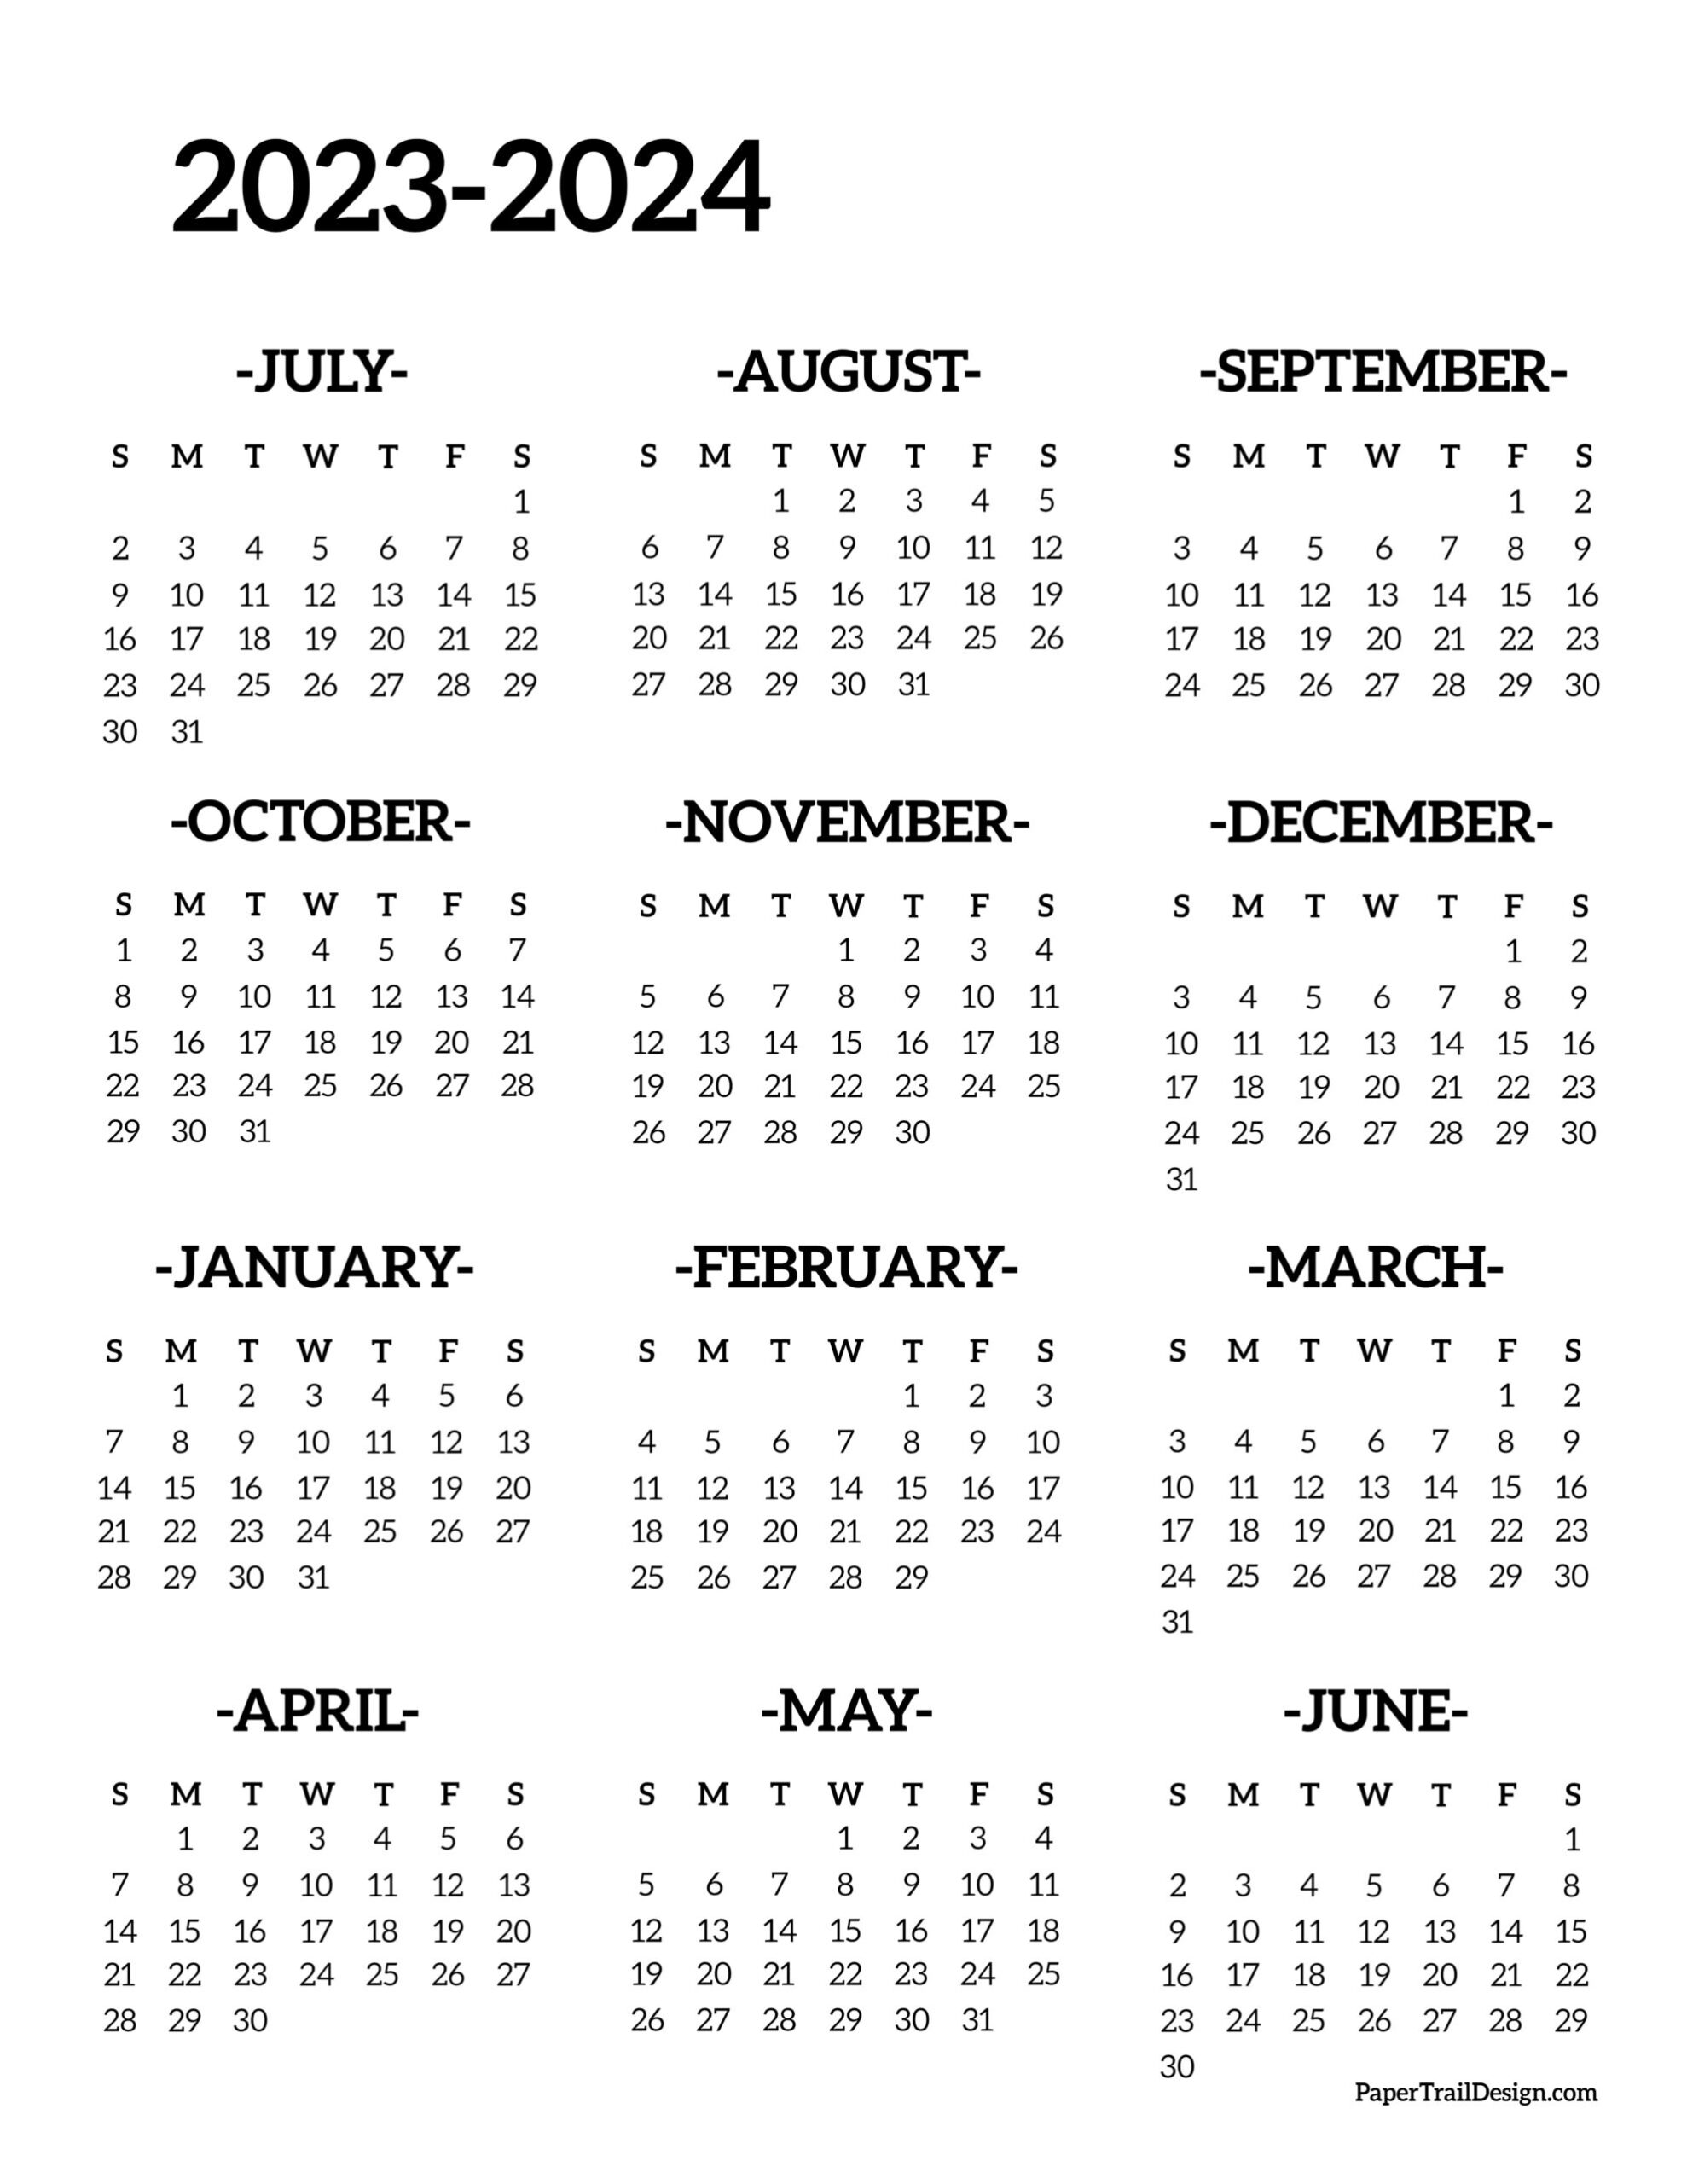 2023-2024 School Year Calendar Free Printable - Paper Trail Design | Free Printable Calendar 2023 2024 Editable